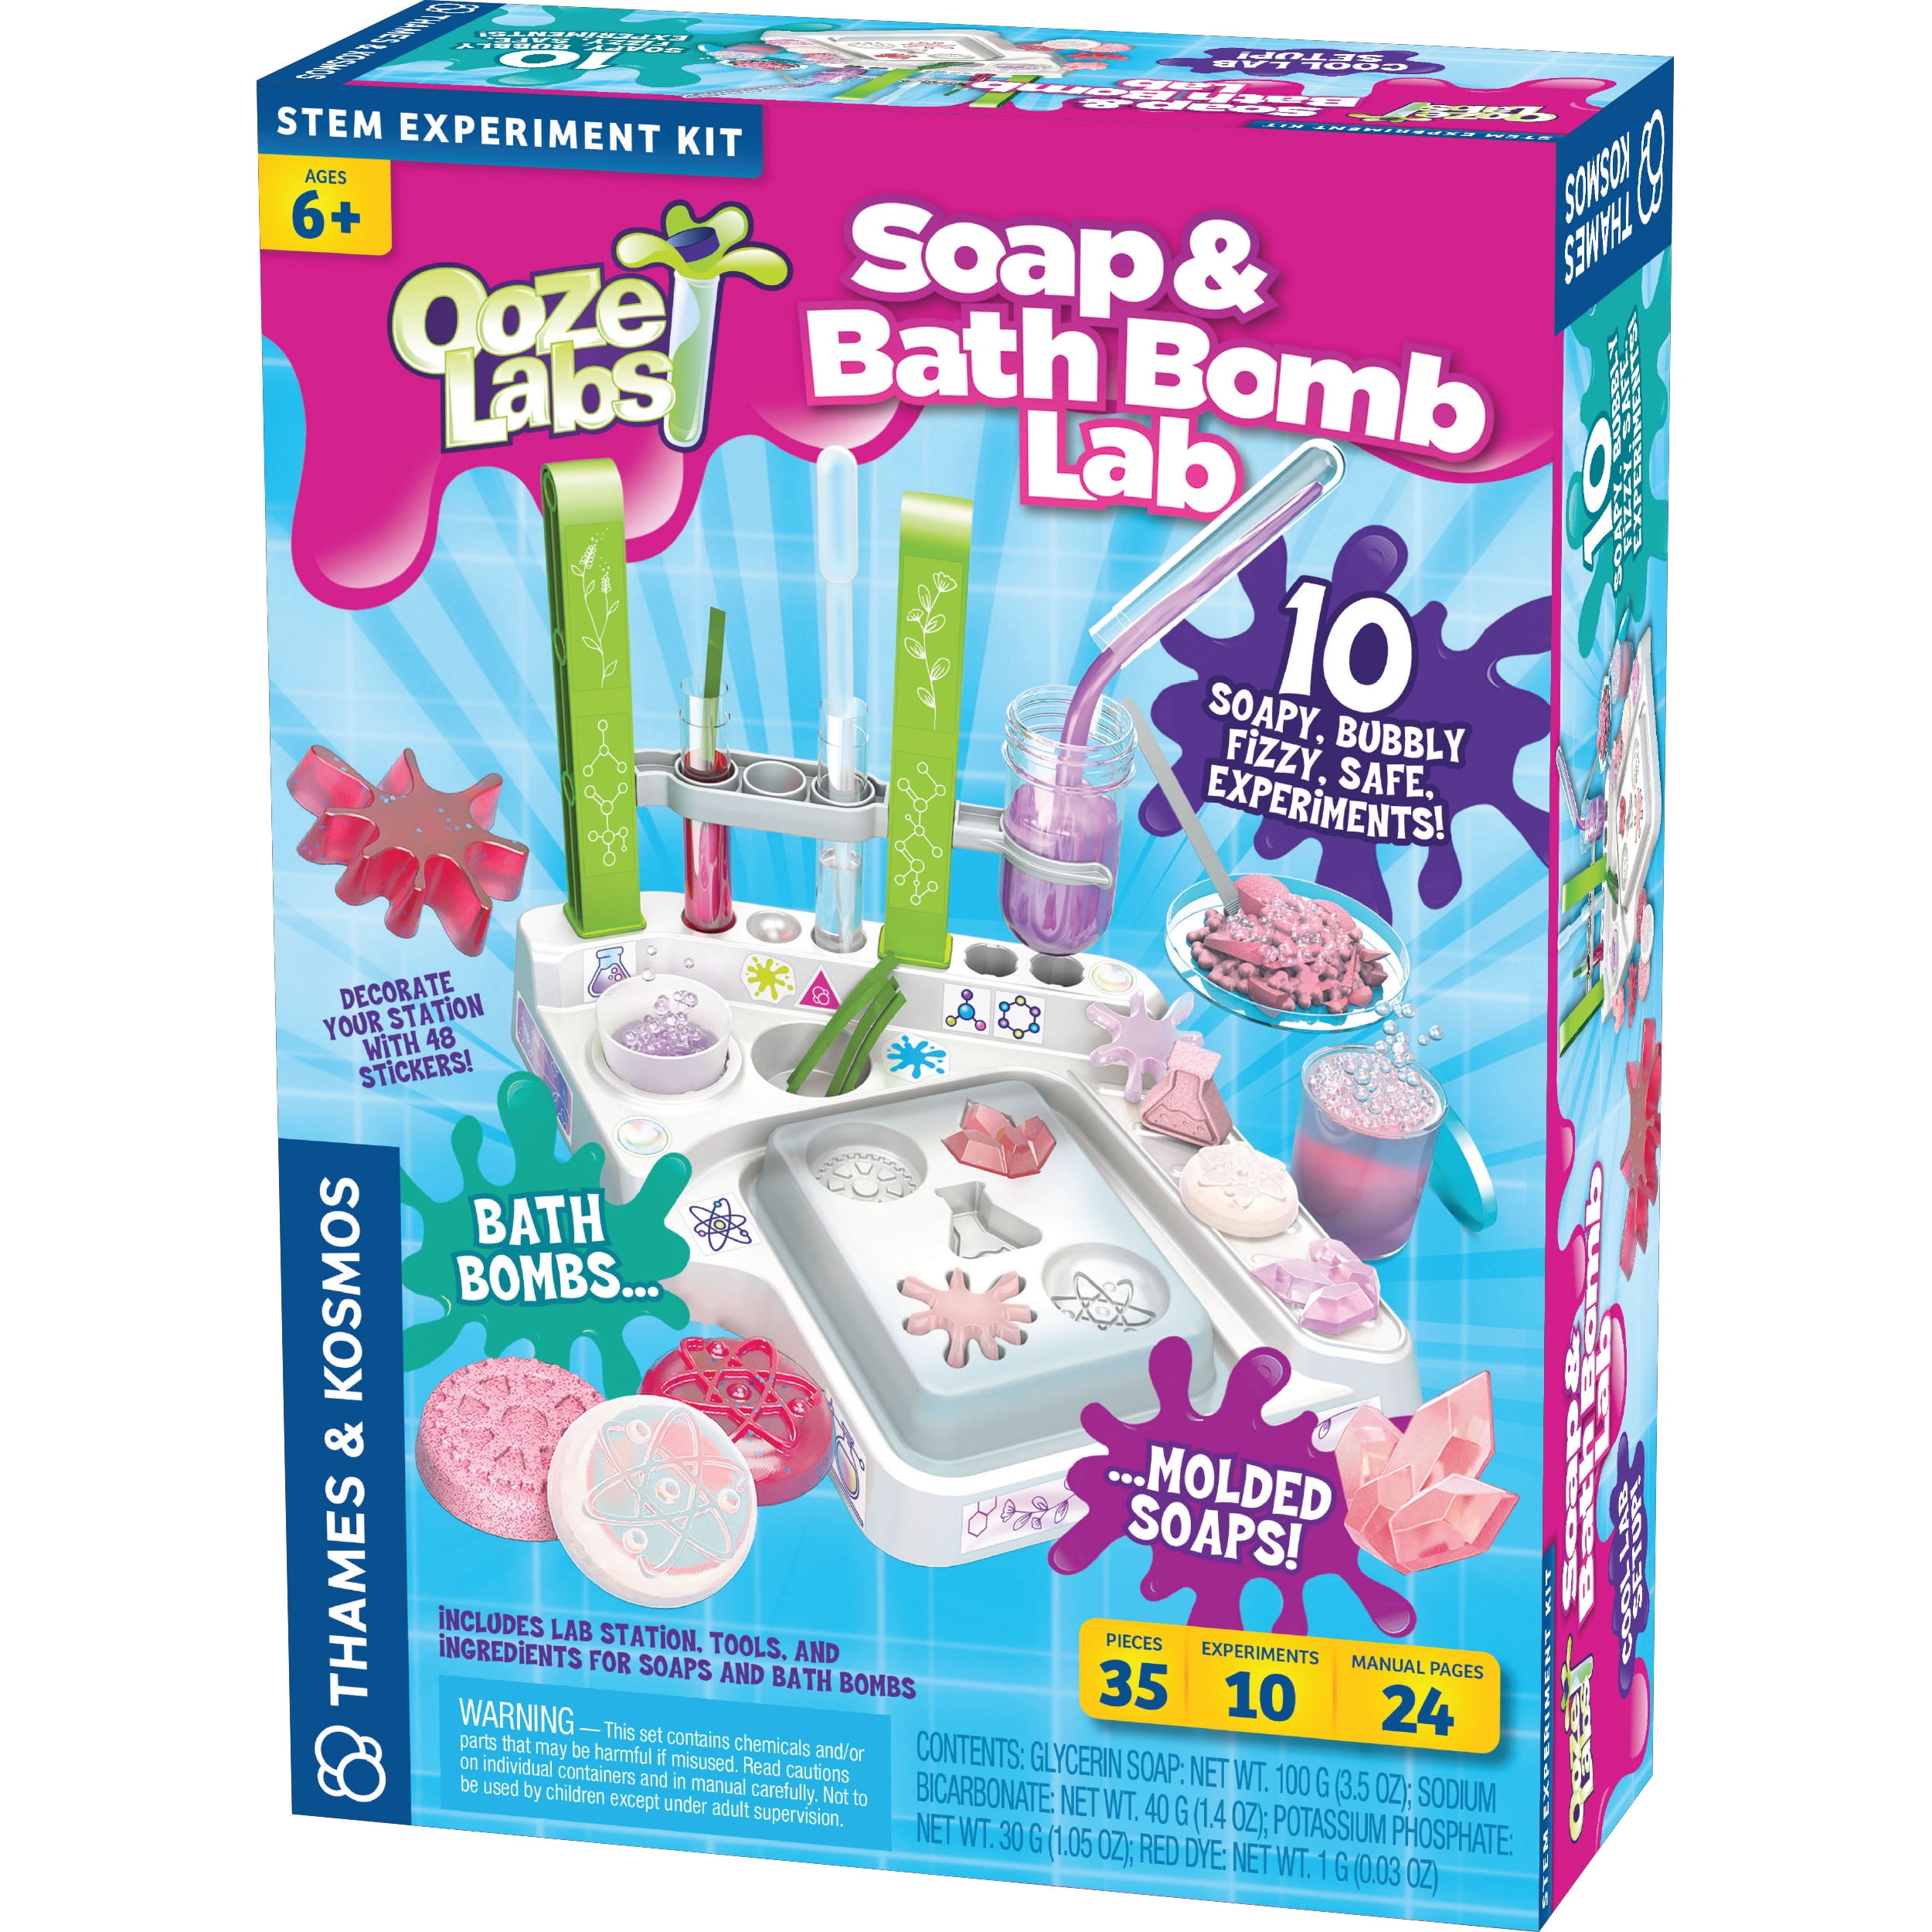 ⭐NIB Ooze Labs Soap & Bath Bomb Lab STEM Experiment Kit w/Cool Lab Setup Ages 6+ 